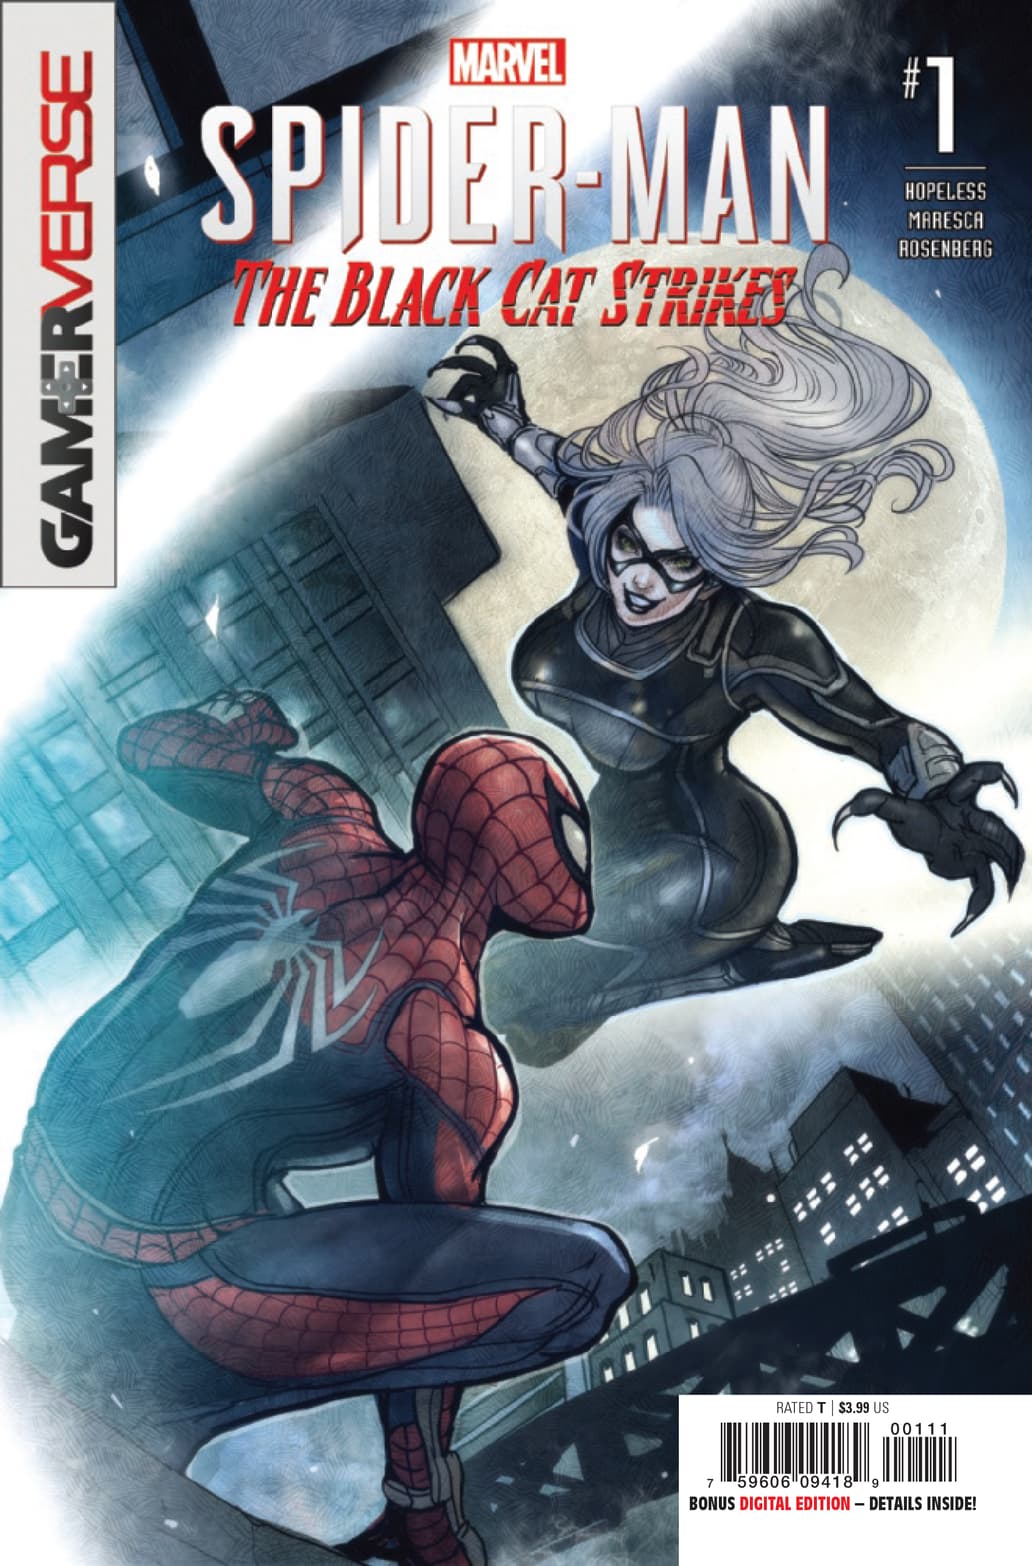 MARVEL'S SPIDER-MAN: THE BLACK CAT STRIKES #1 — Main Cover by Sana Takeda